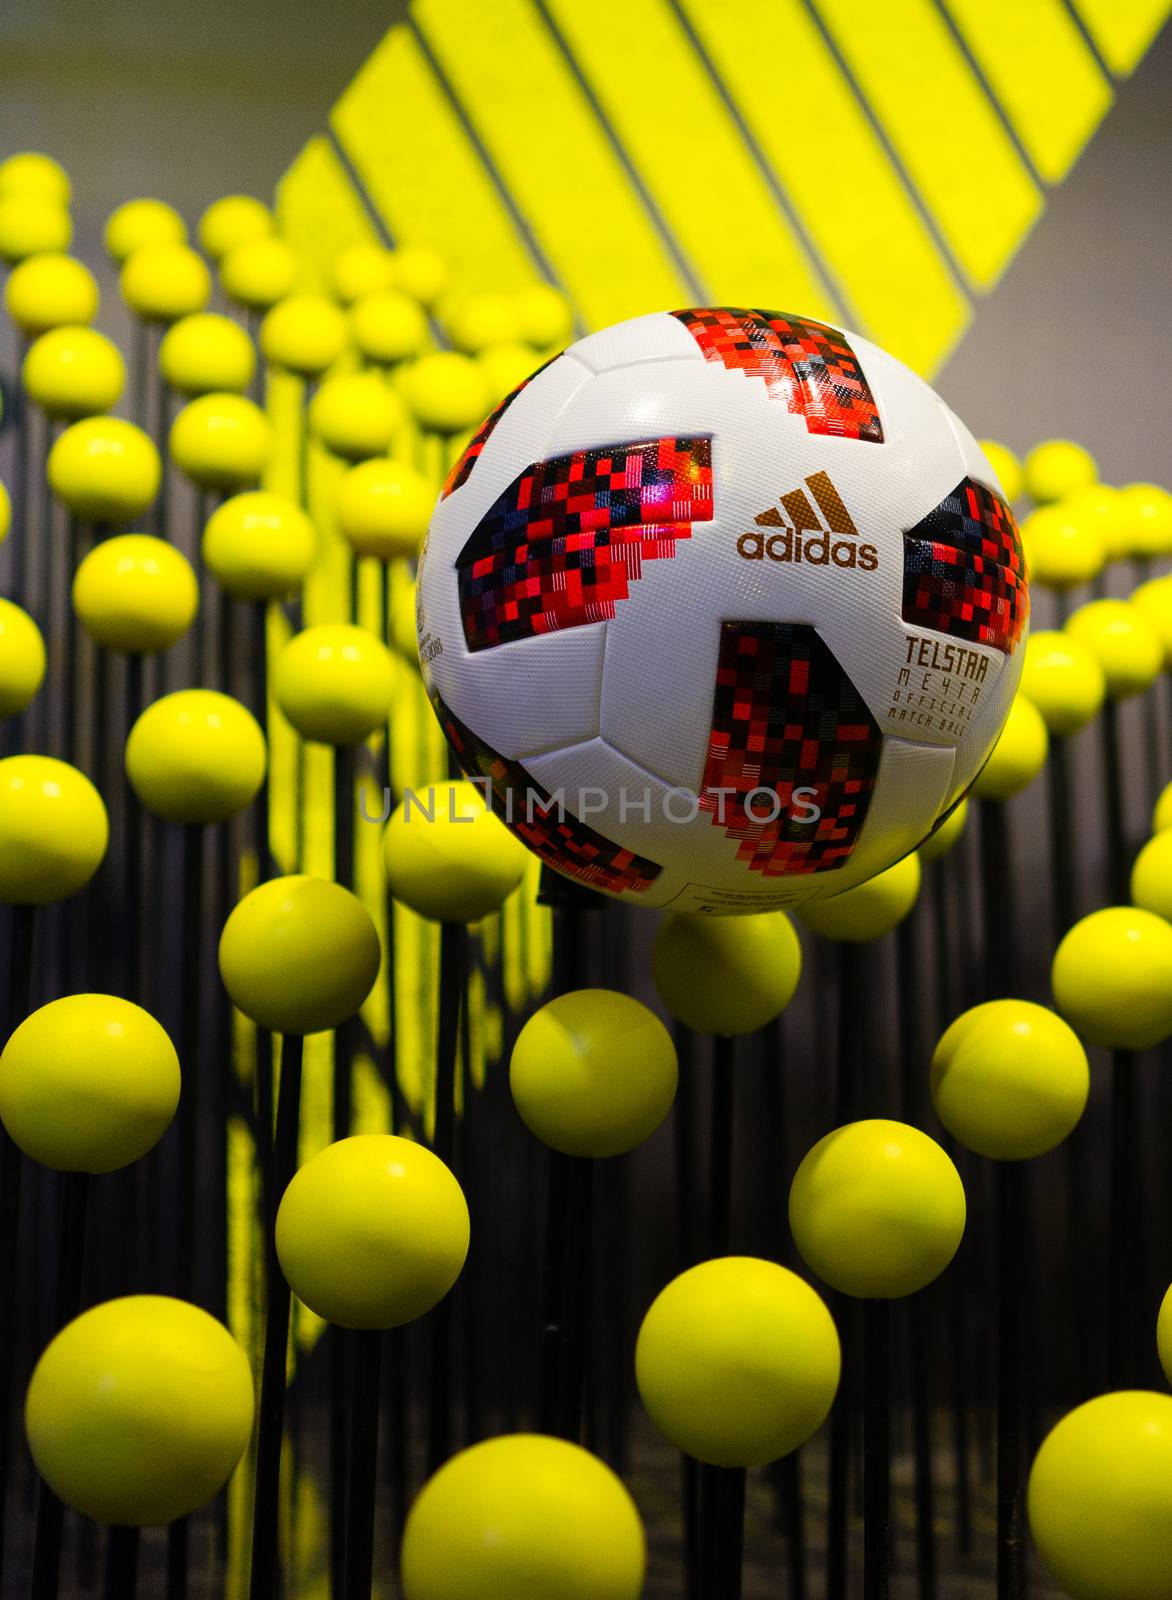 June 30, 2018. The official ball for the FIFA World Cup 2018 football playoff games  Adidas Telstar Mechta